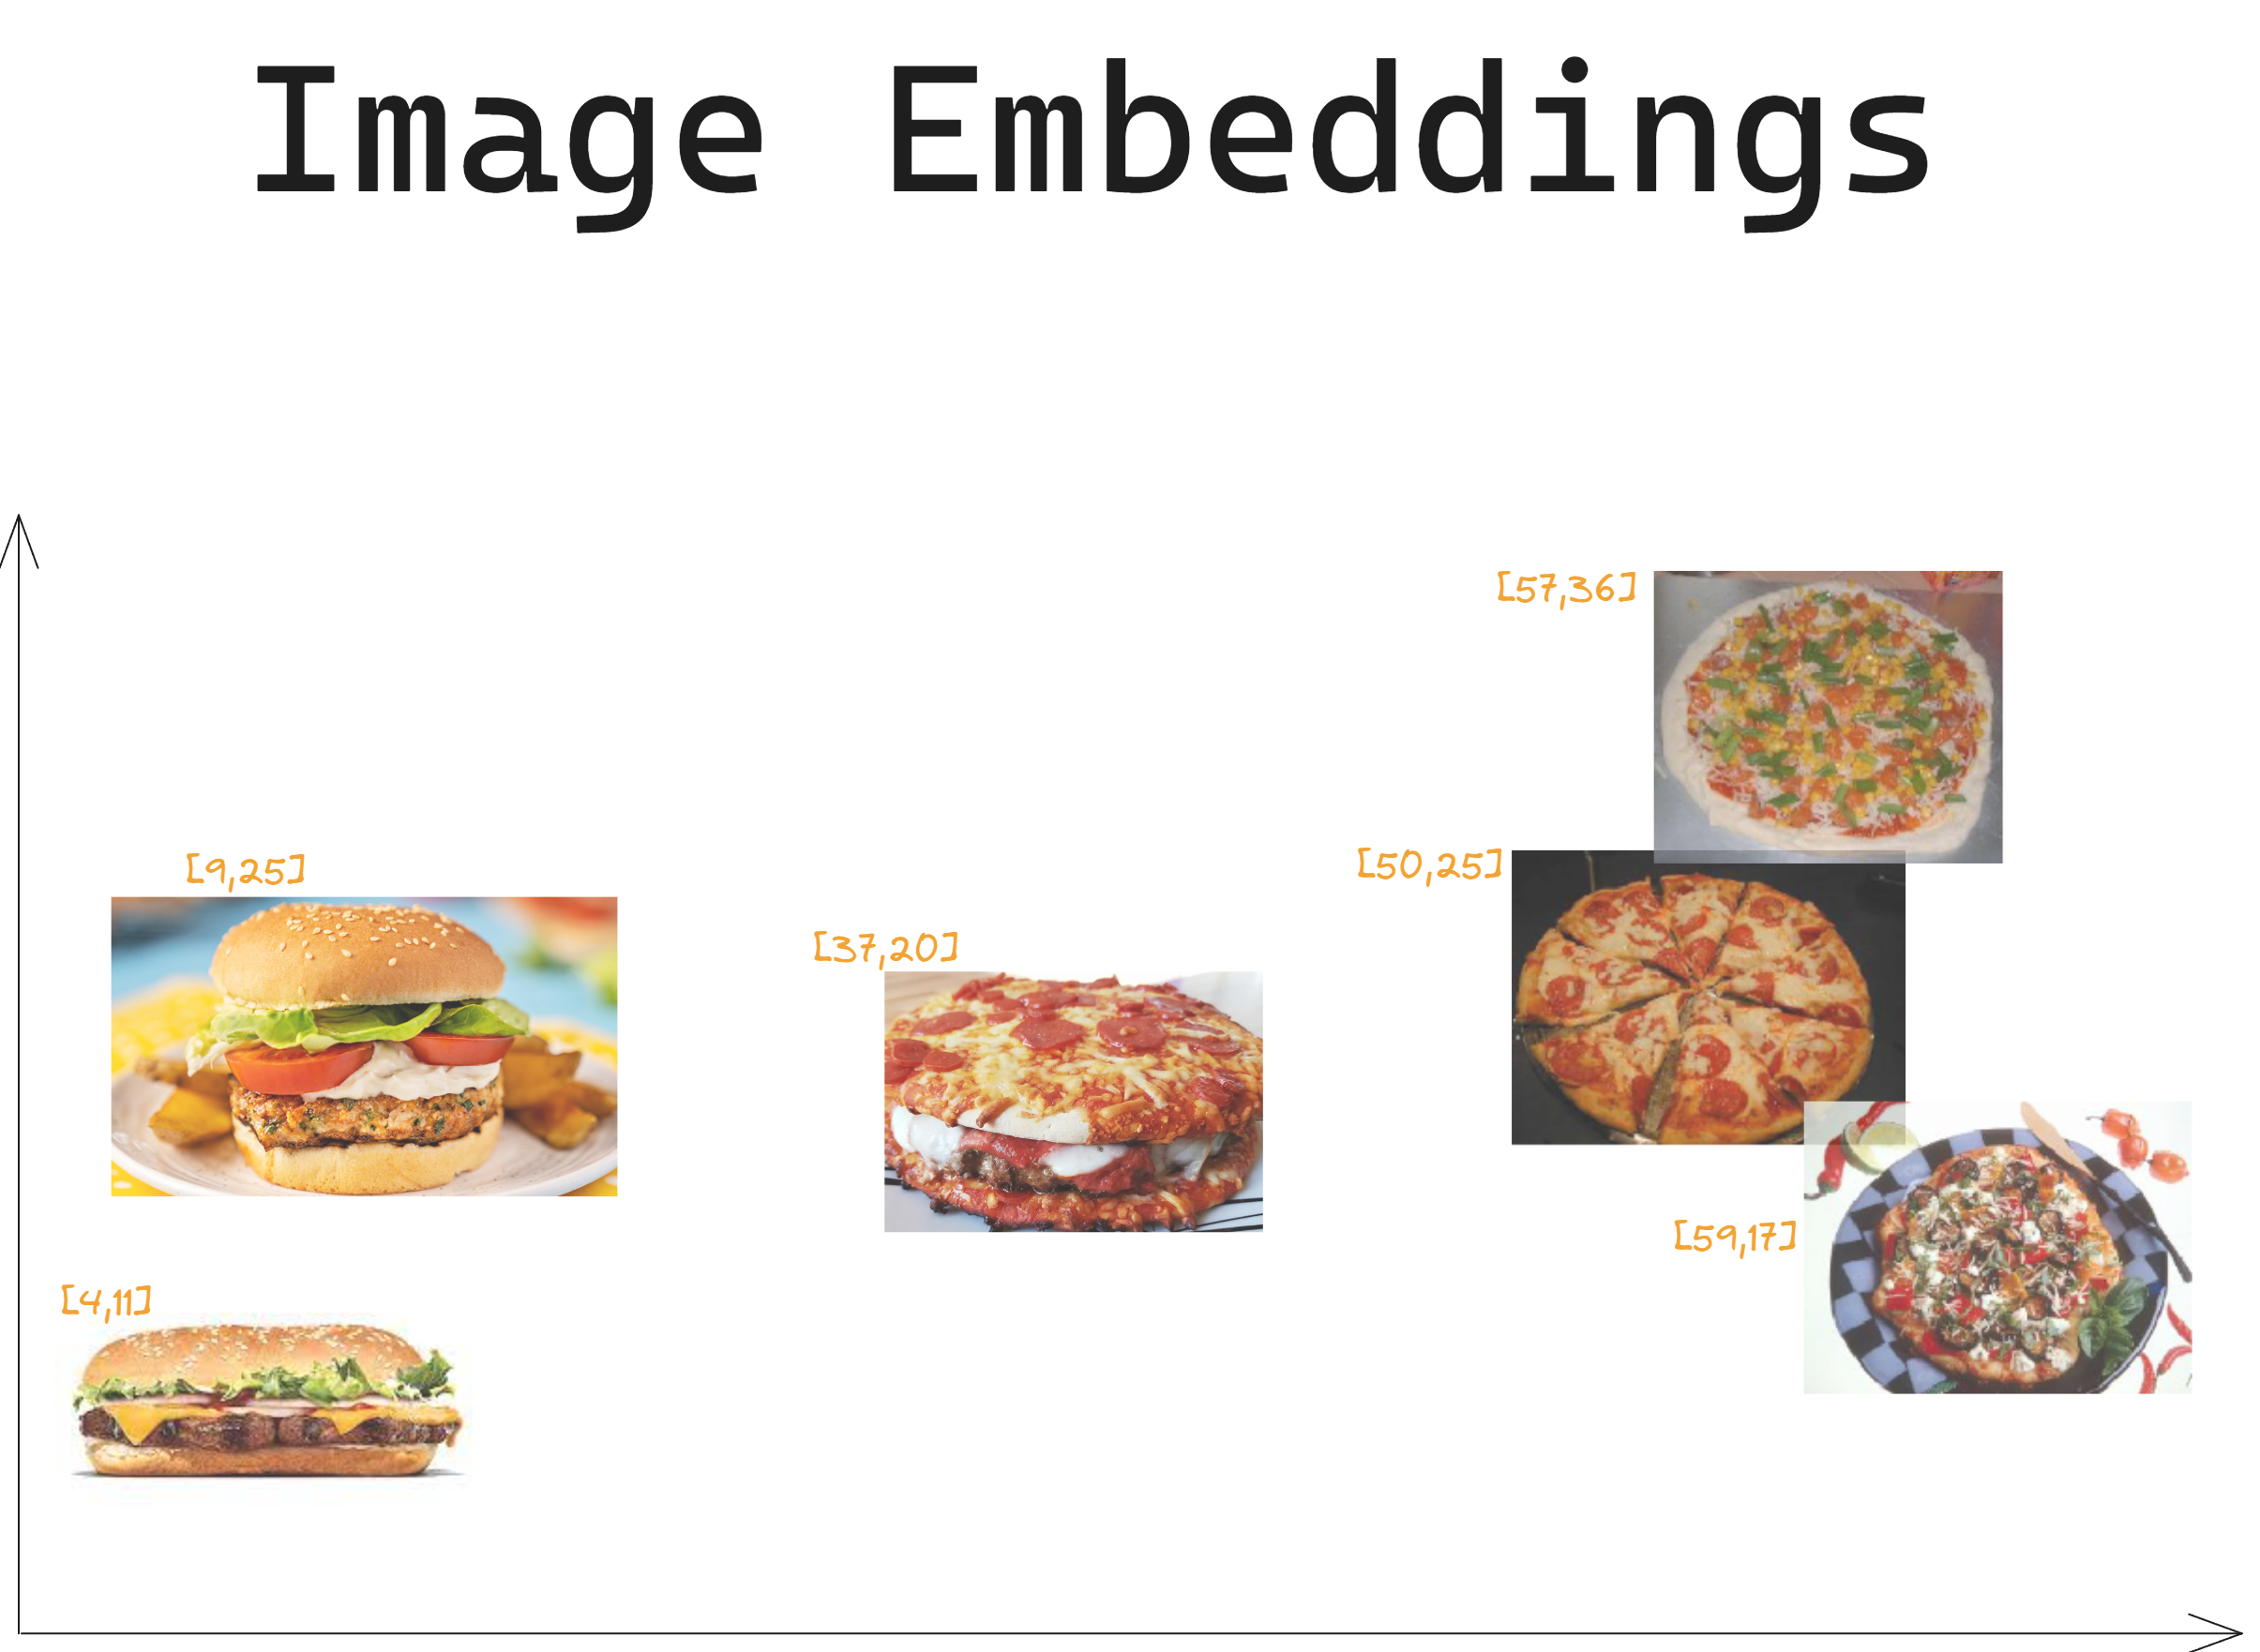 Image Embeddings